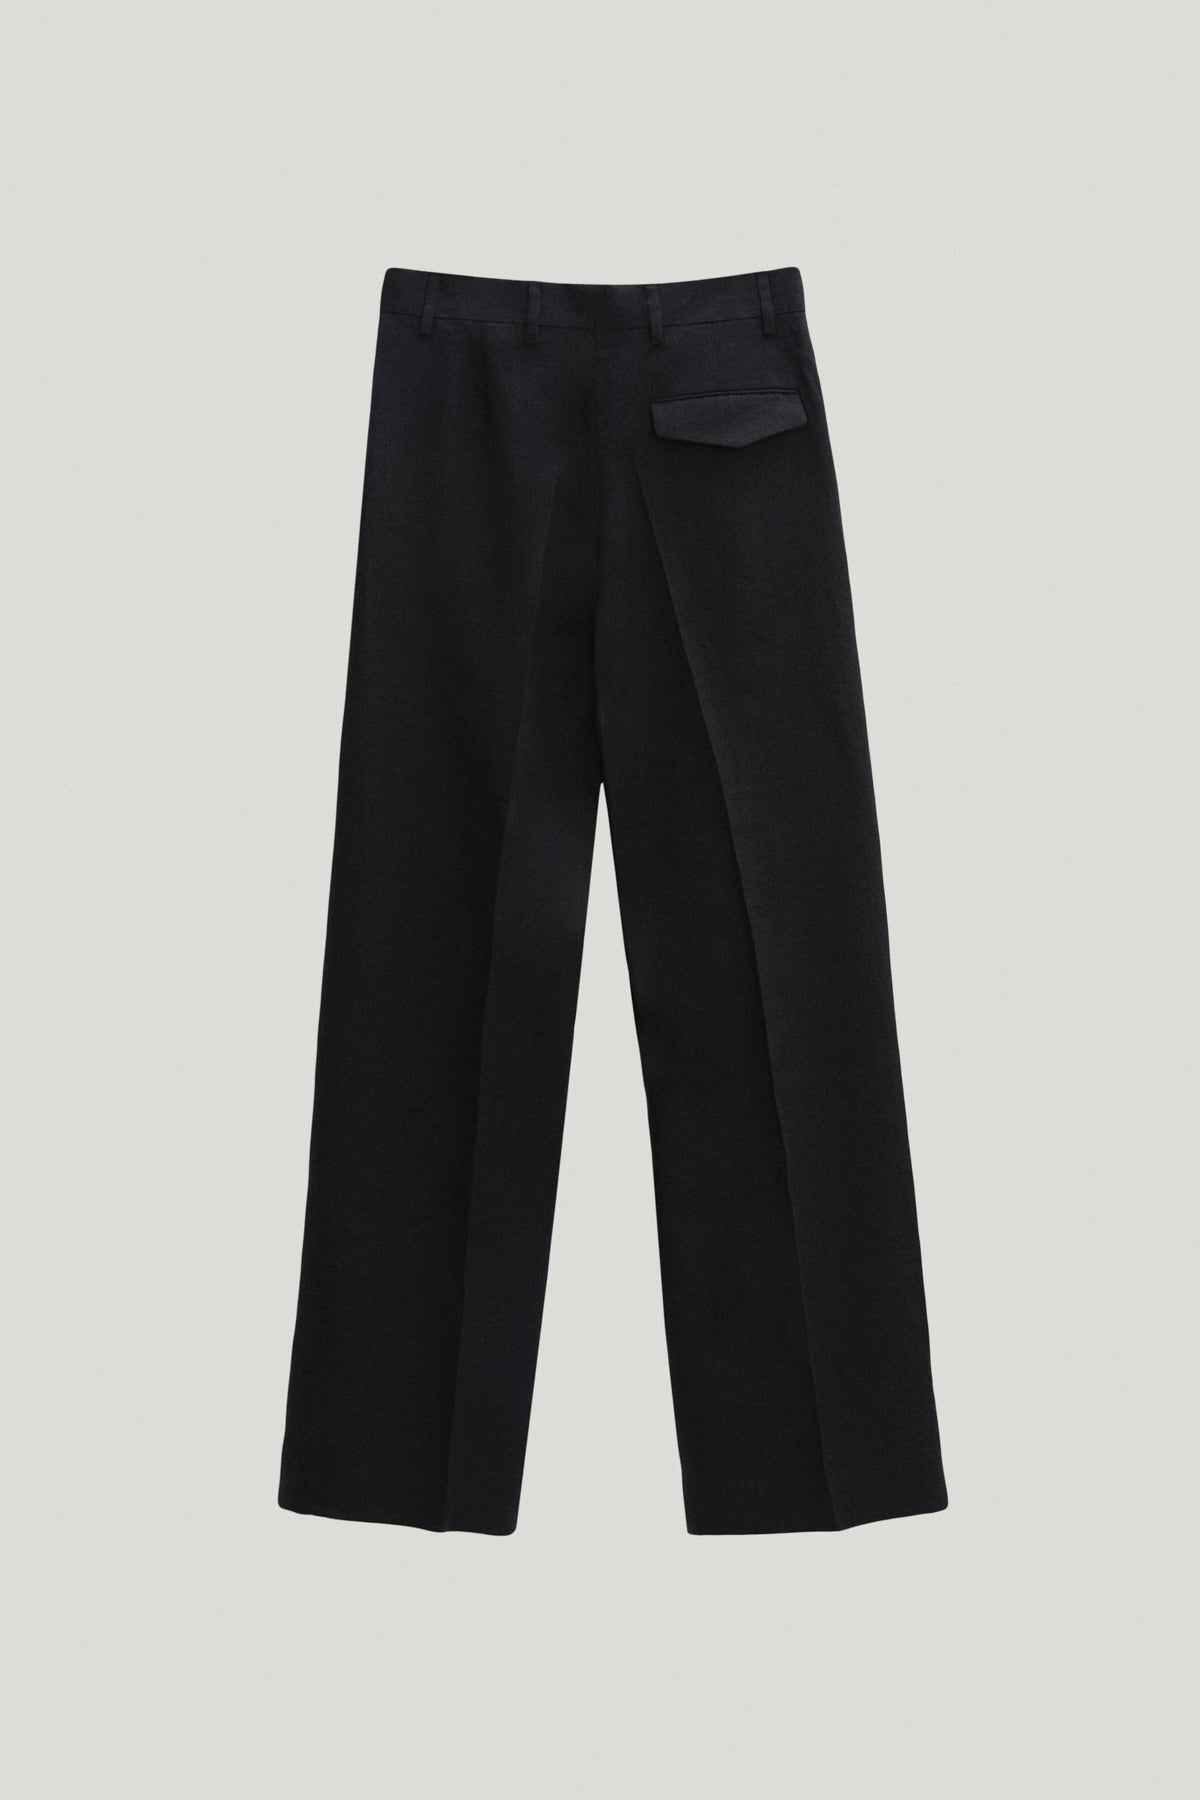 Black | The Linen Twill Pants